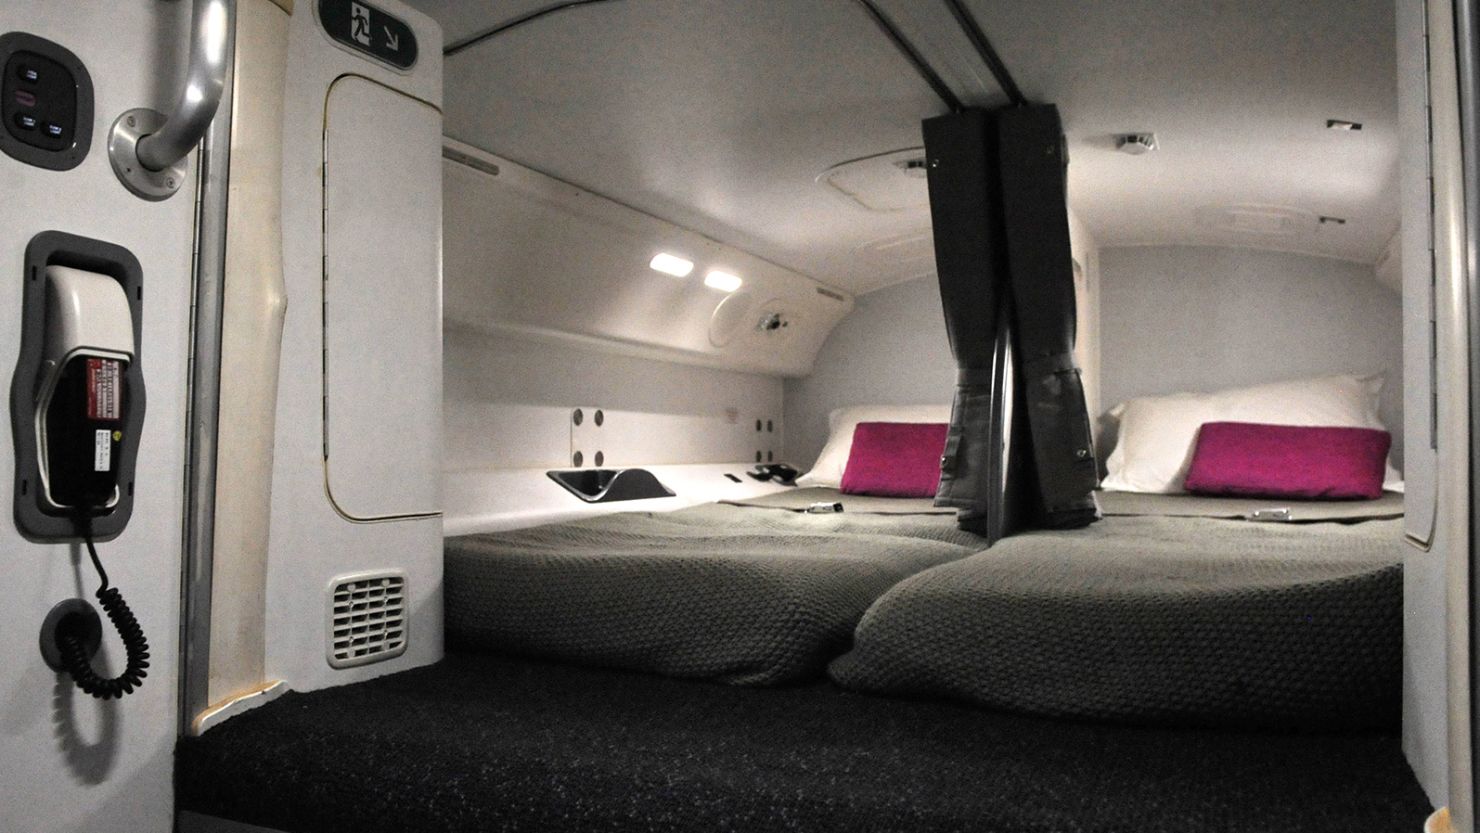 https://media.cnn.com/api/v1/images/stellar/prod/220623090204-07-airplane-crew-sleeping-quarters.jpg?c=16x9&q=h_833,w_1480,c_fill